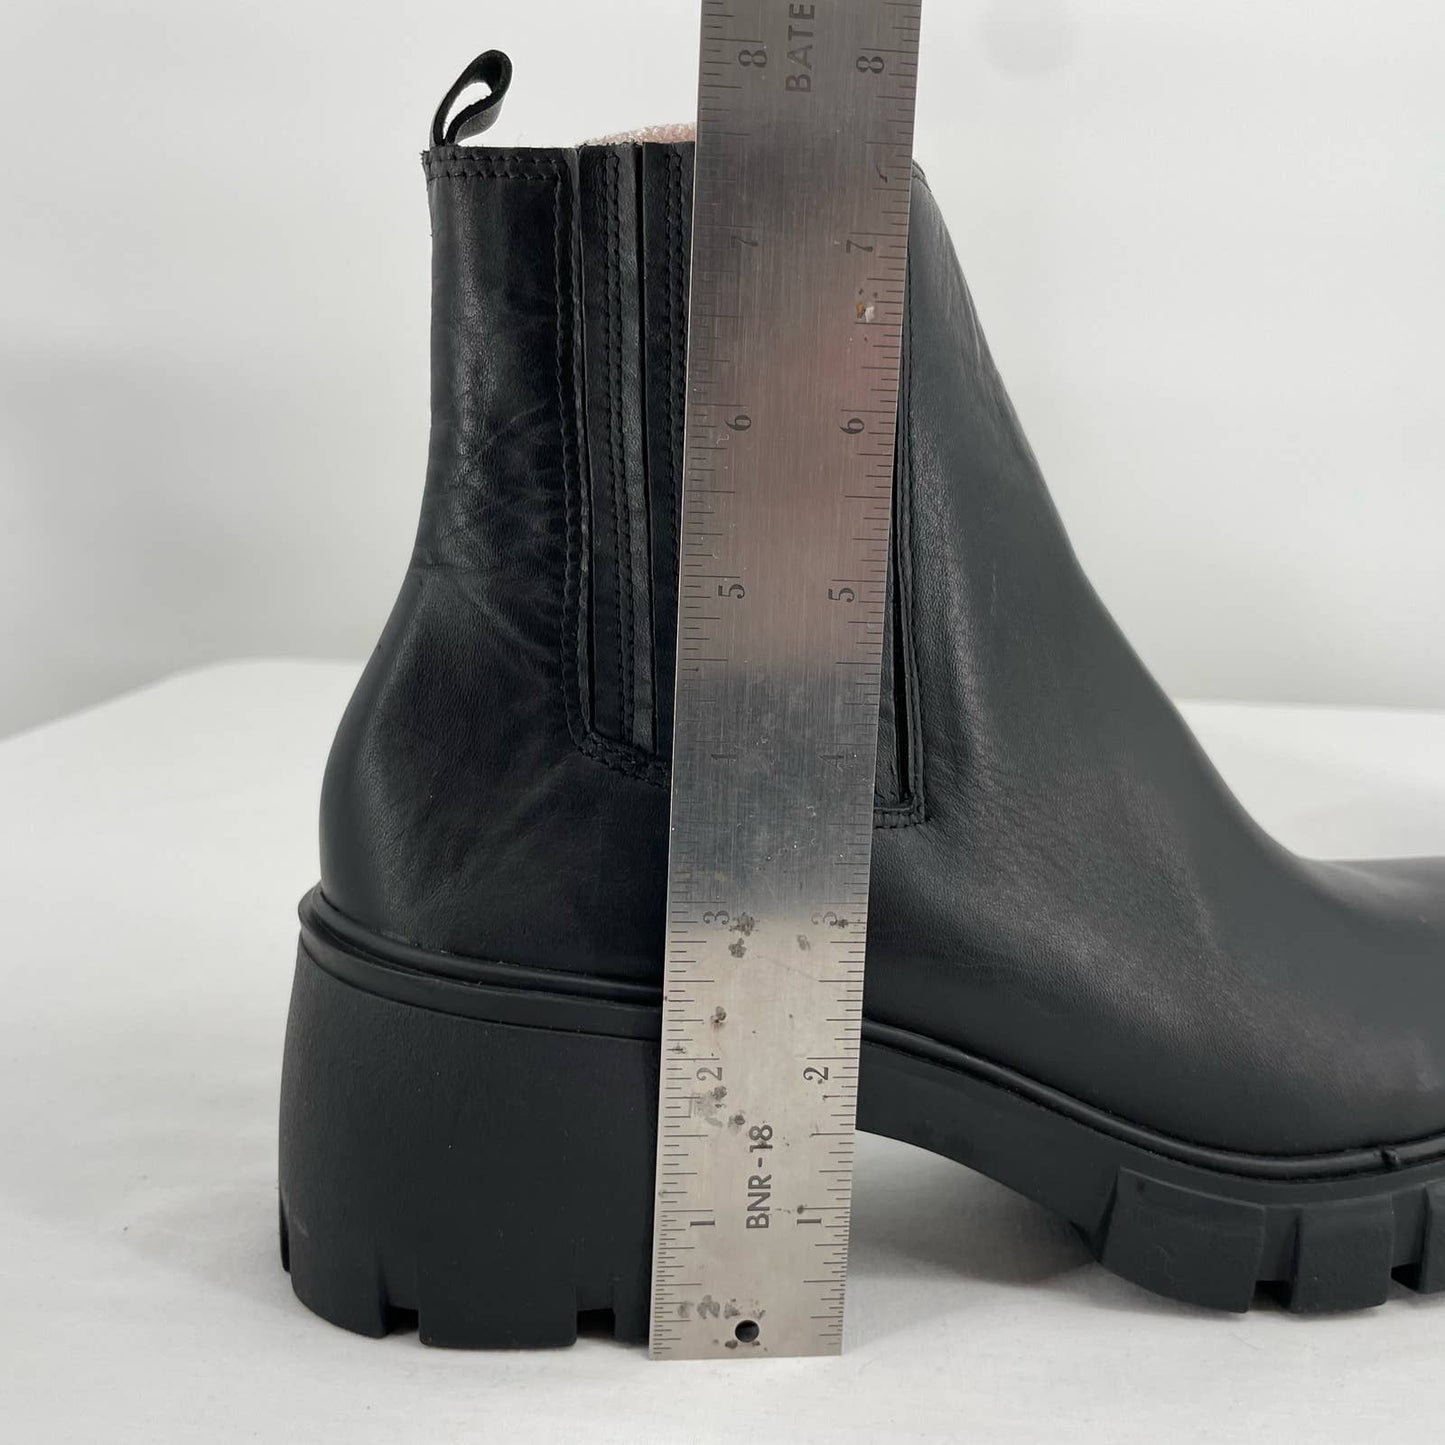 Steve Madden Rankel Women's Black Leather Lug Sole Ankle Boots Size 10